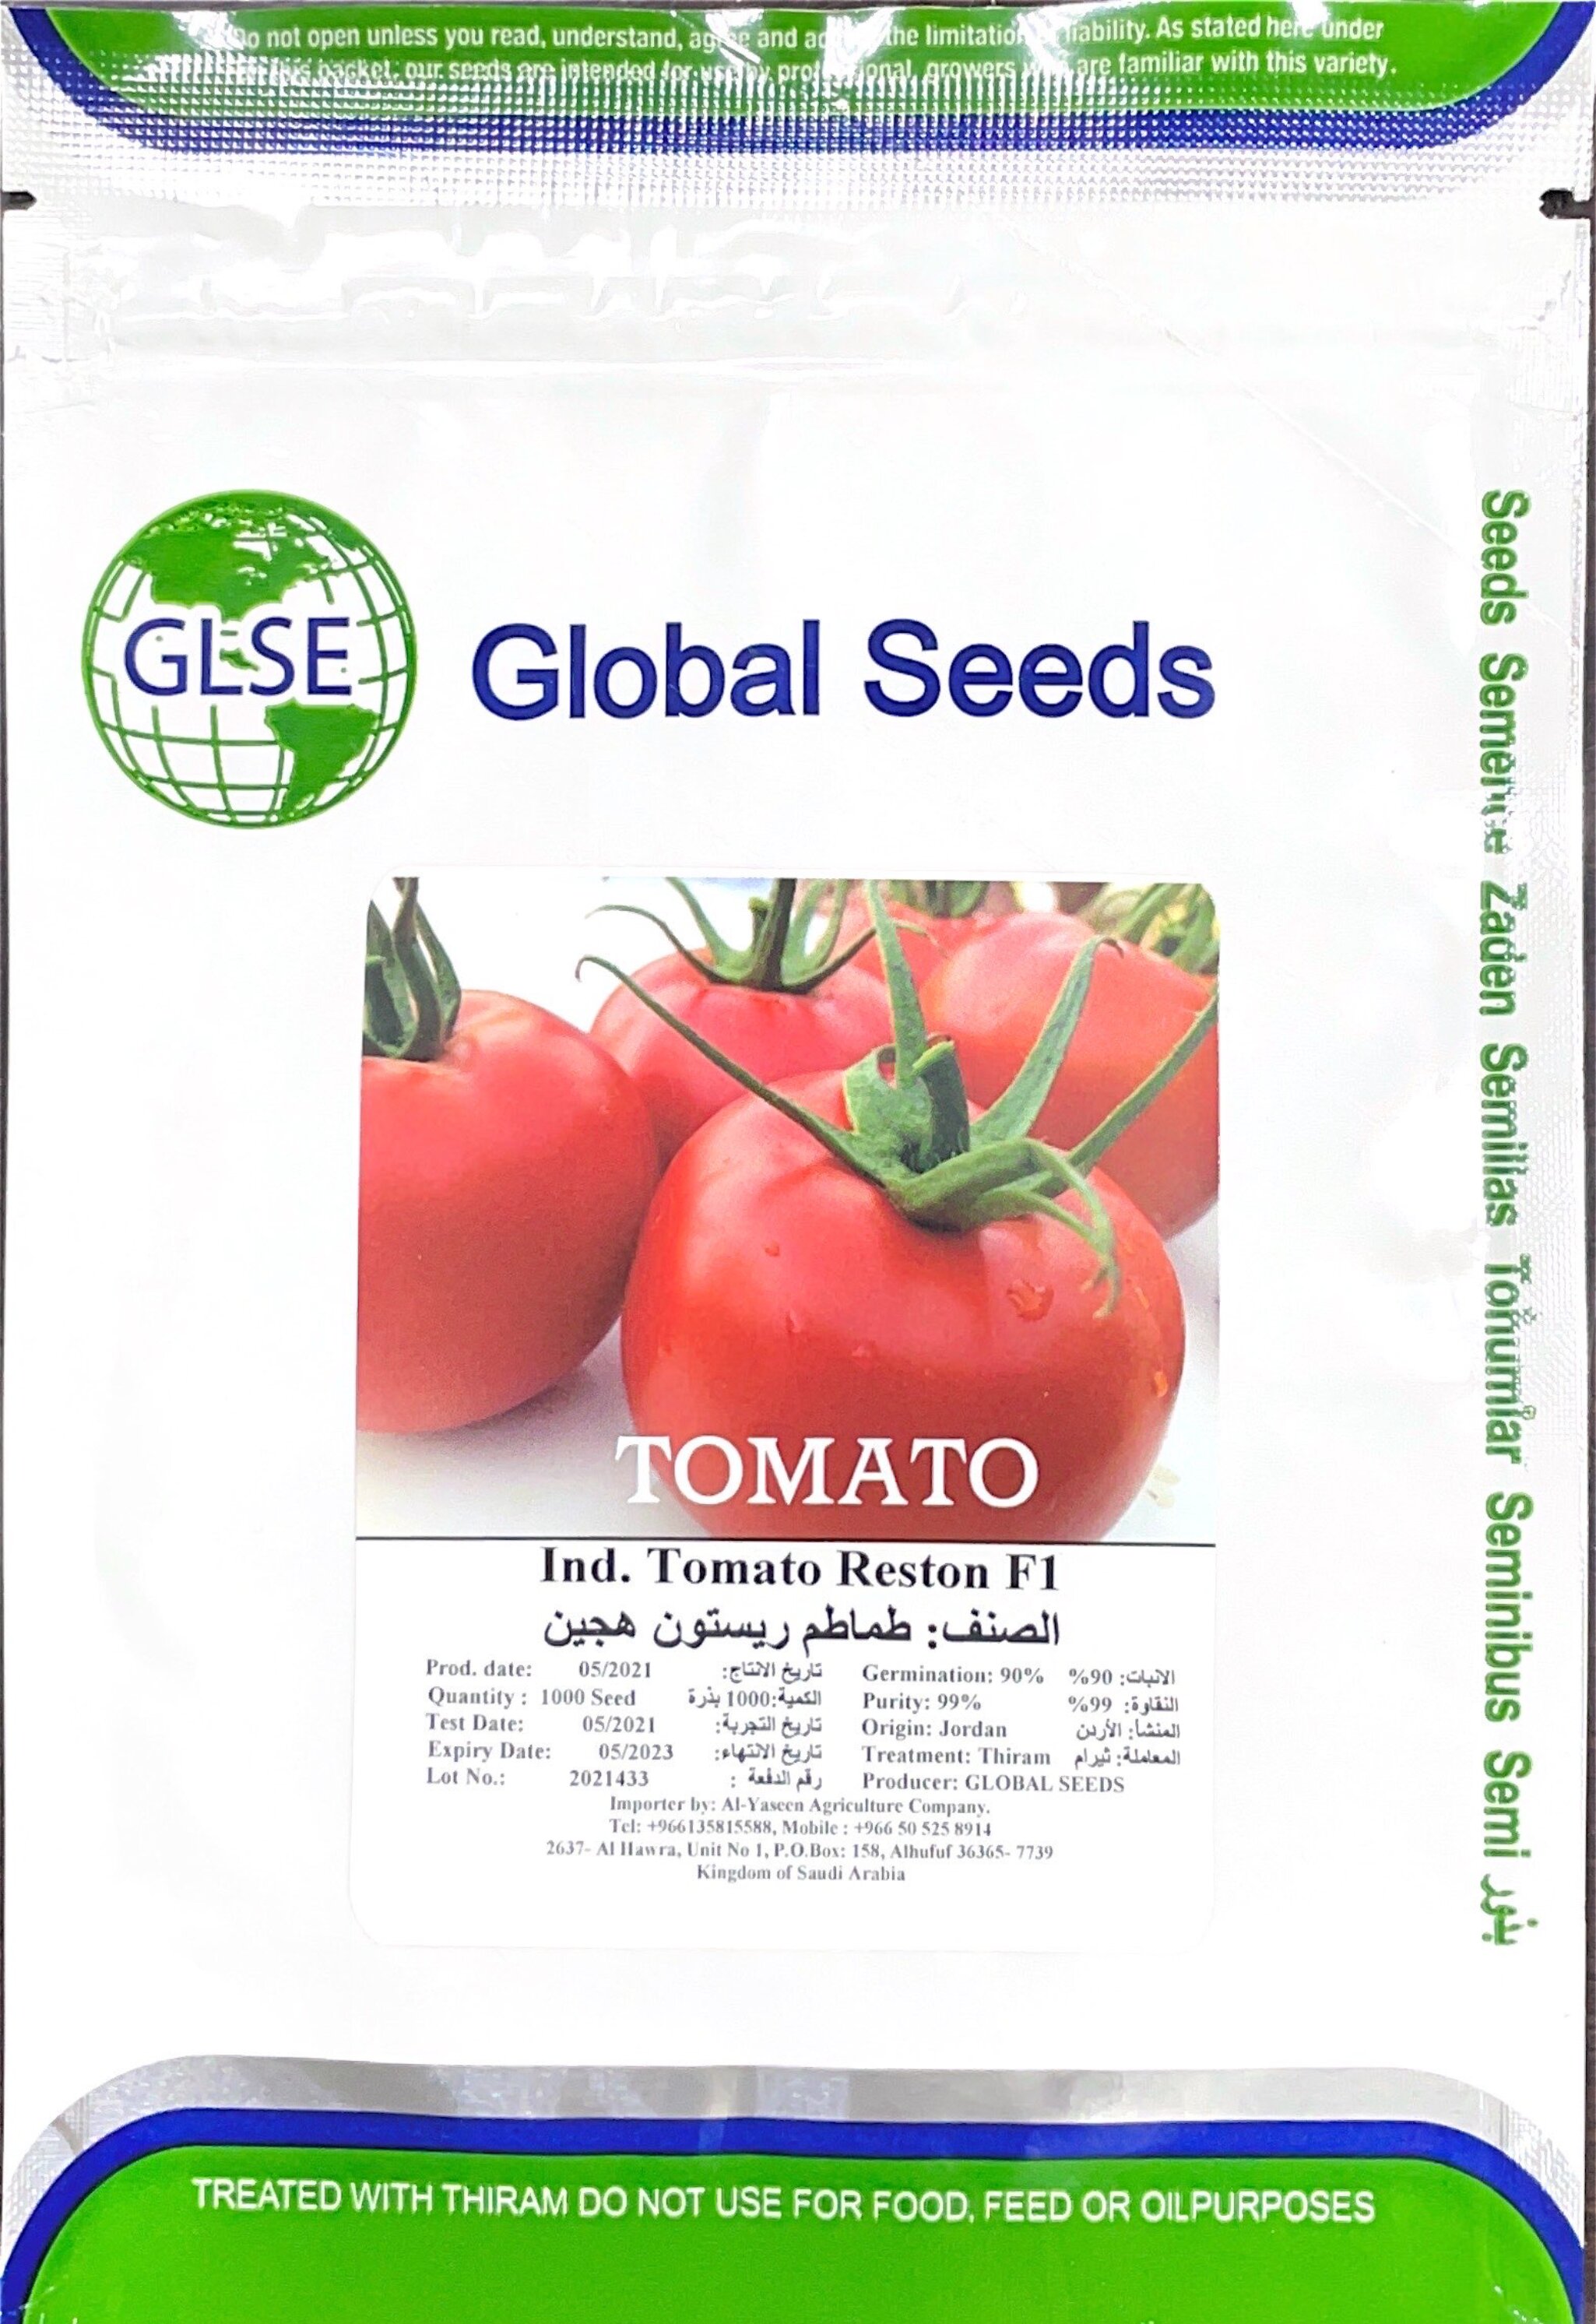 Reston Tomato. Seeds